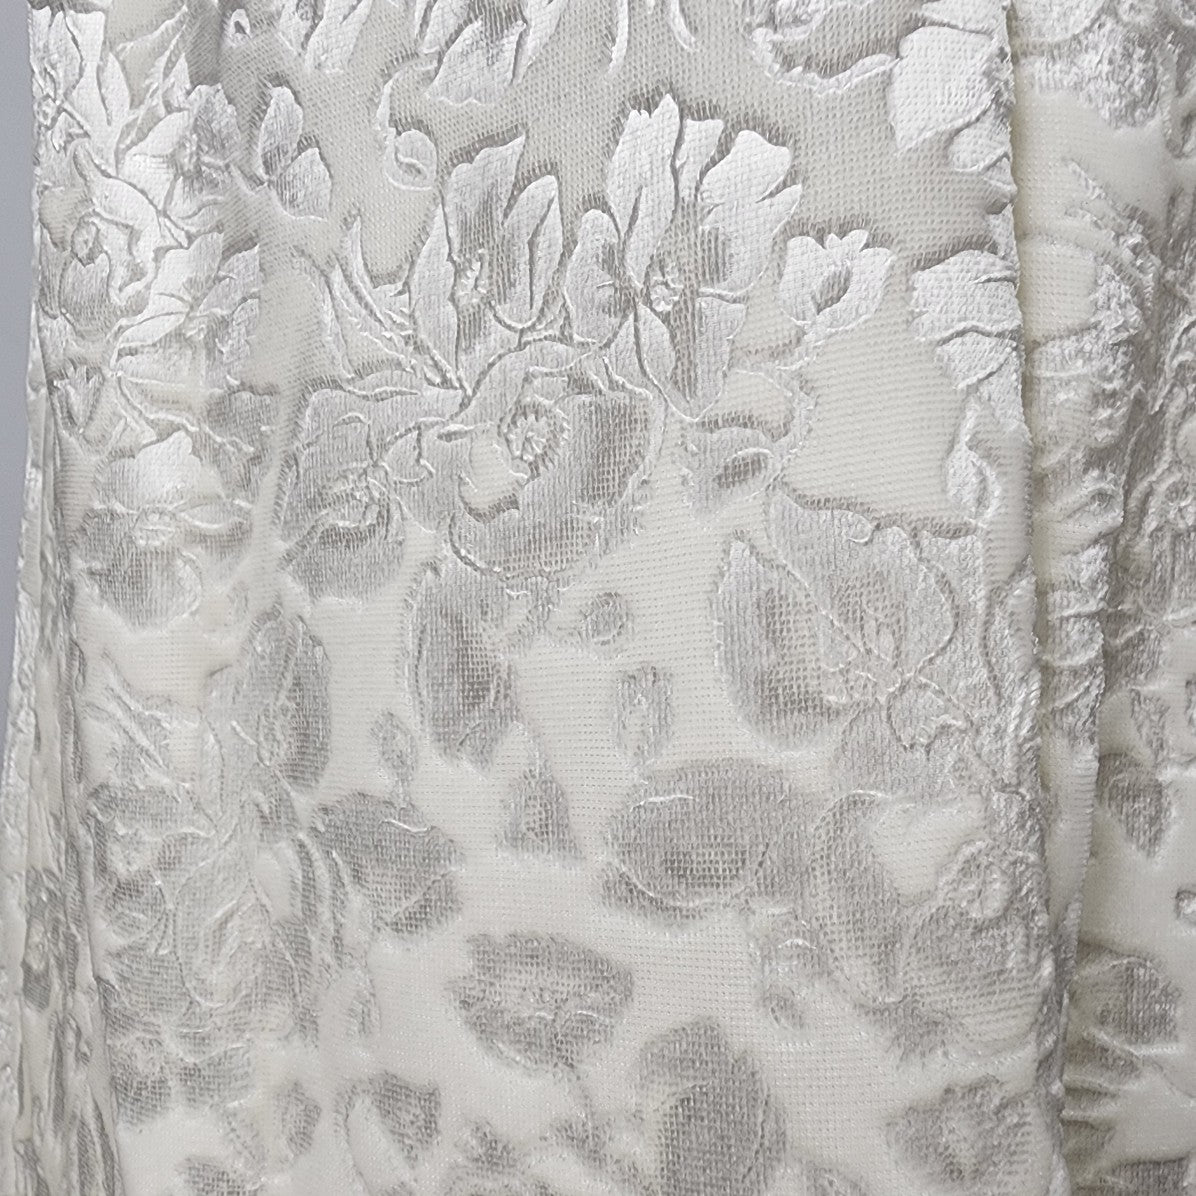 Vintage Ivory Velvet Floral Sleeveless Dress & Long Jacket Size S